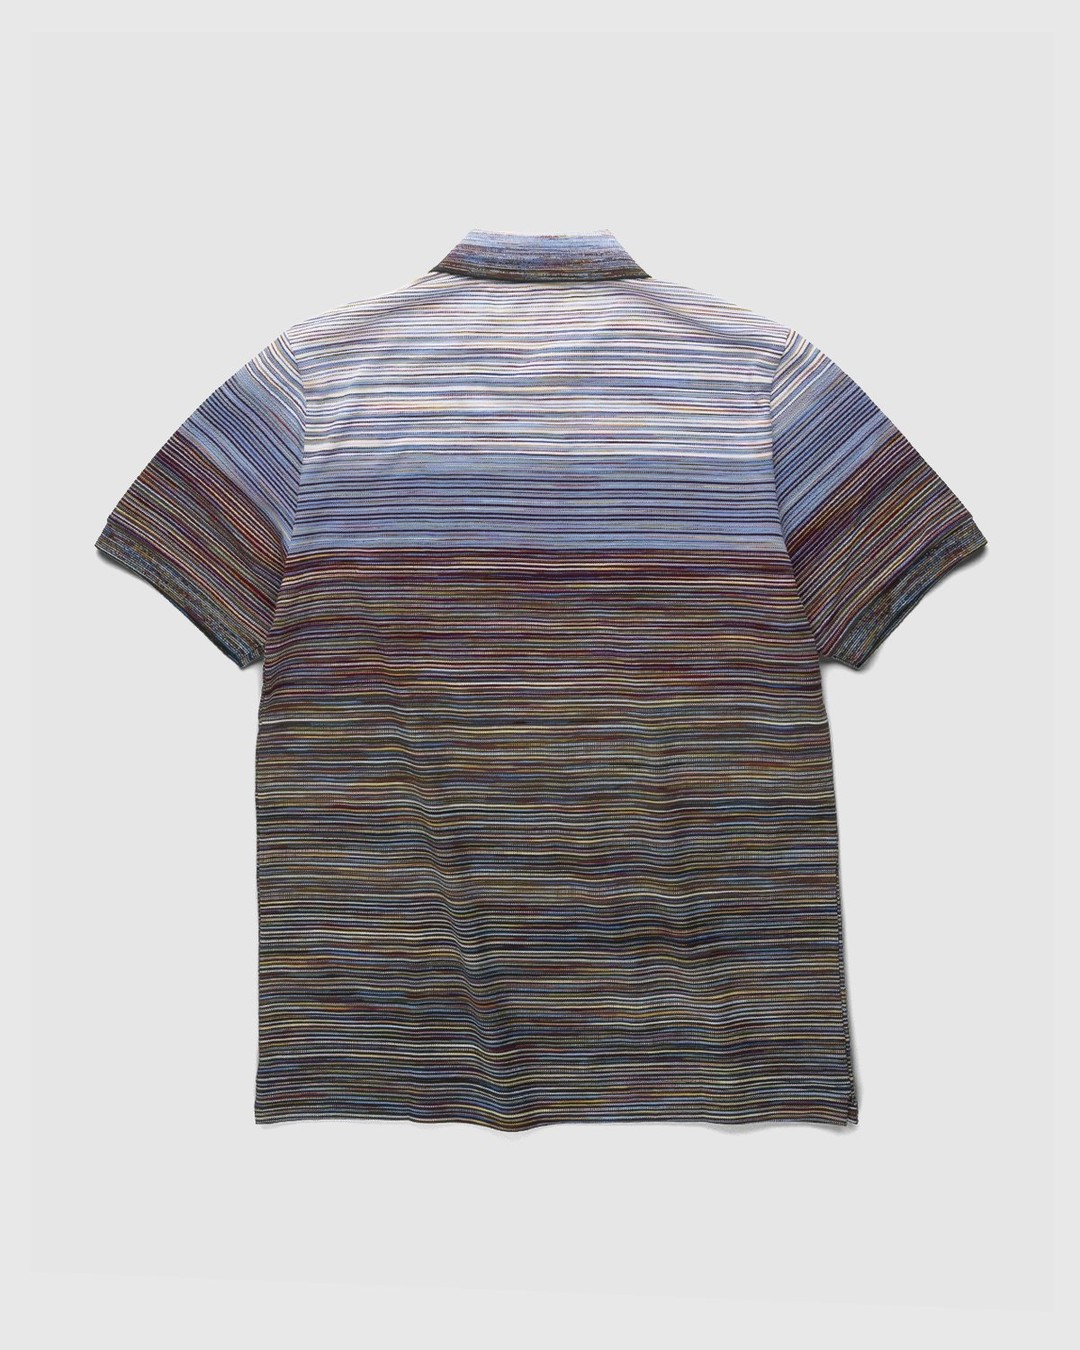 Missoni – Pattern Short-Sleeve Polo Militare Bordo - Shirts - Multi - Image 2